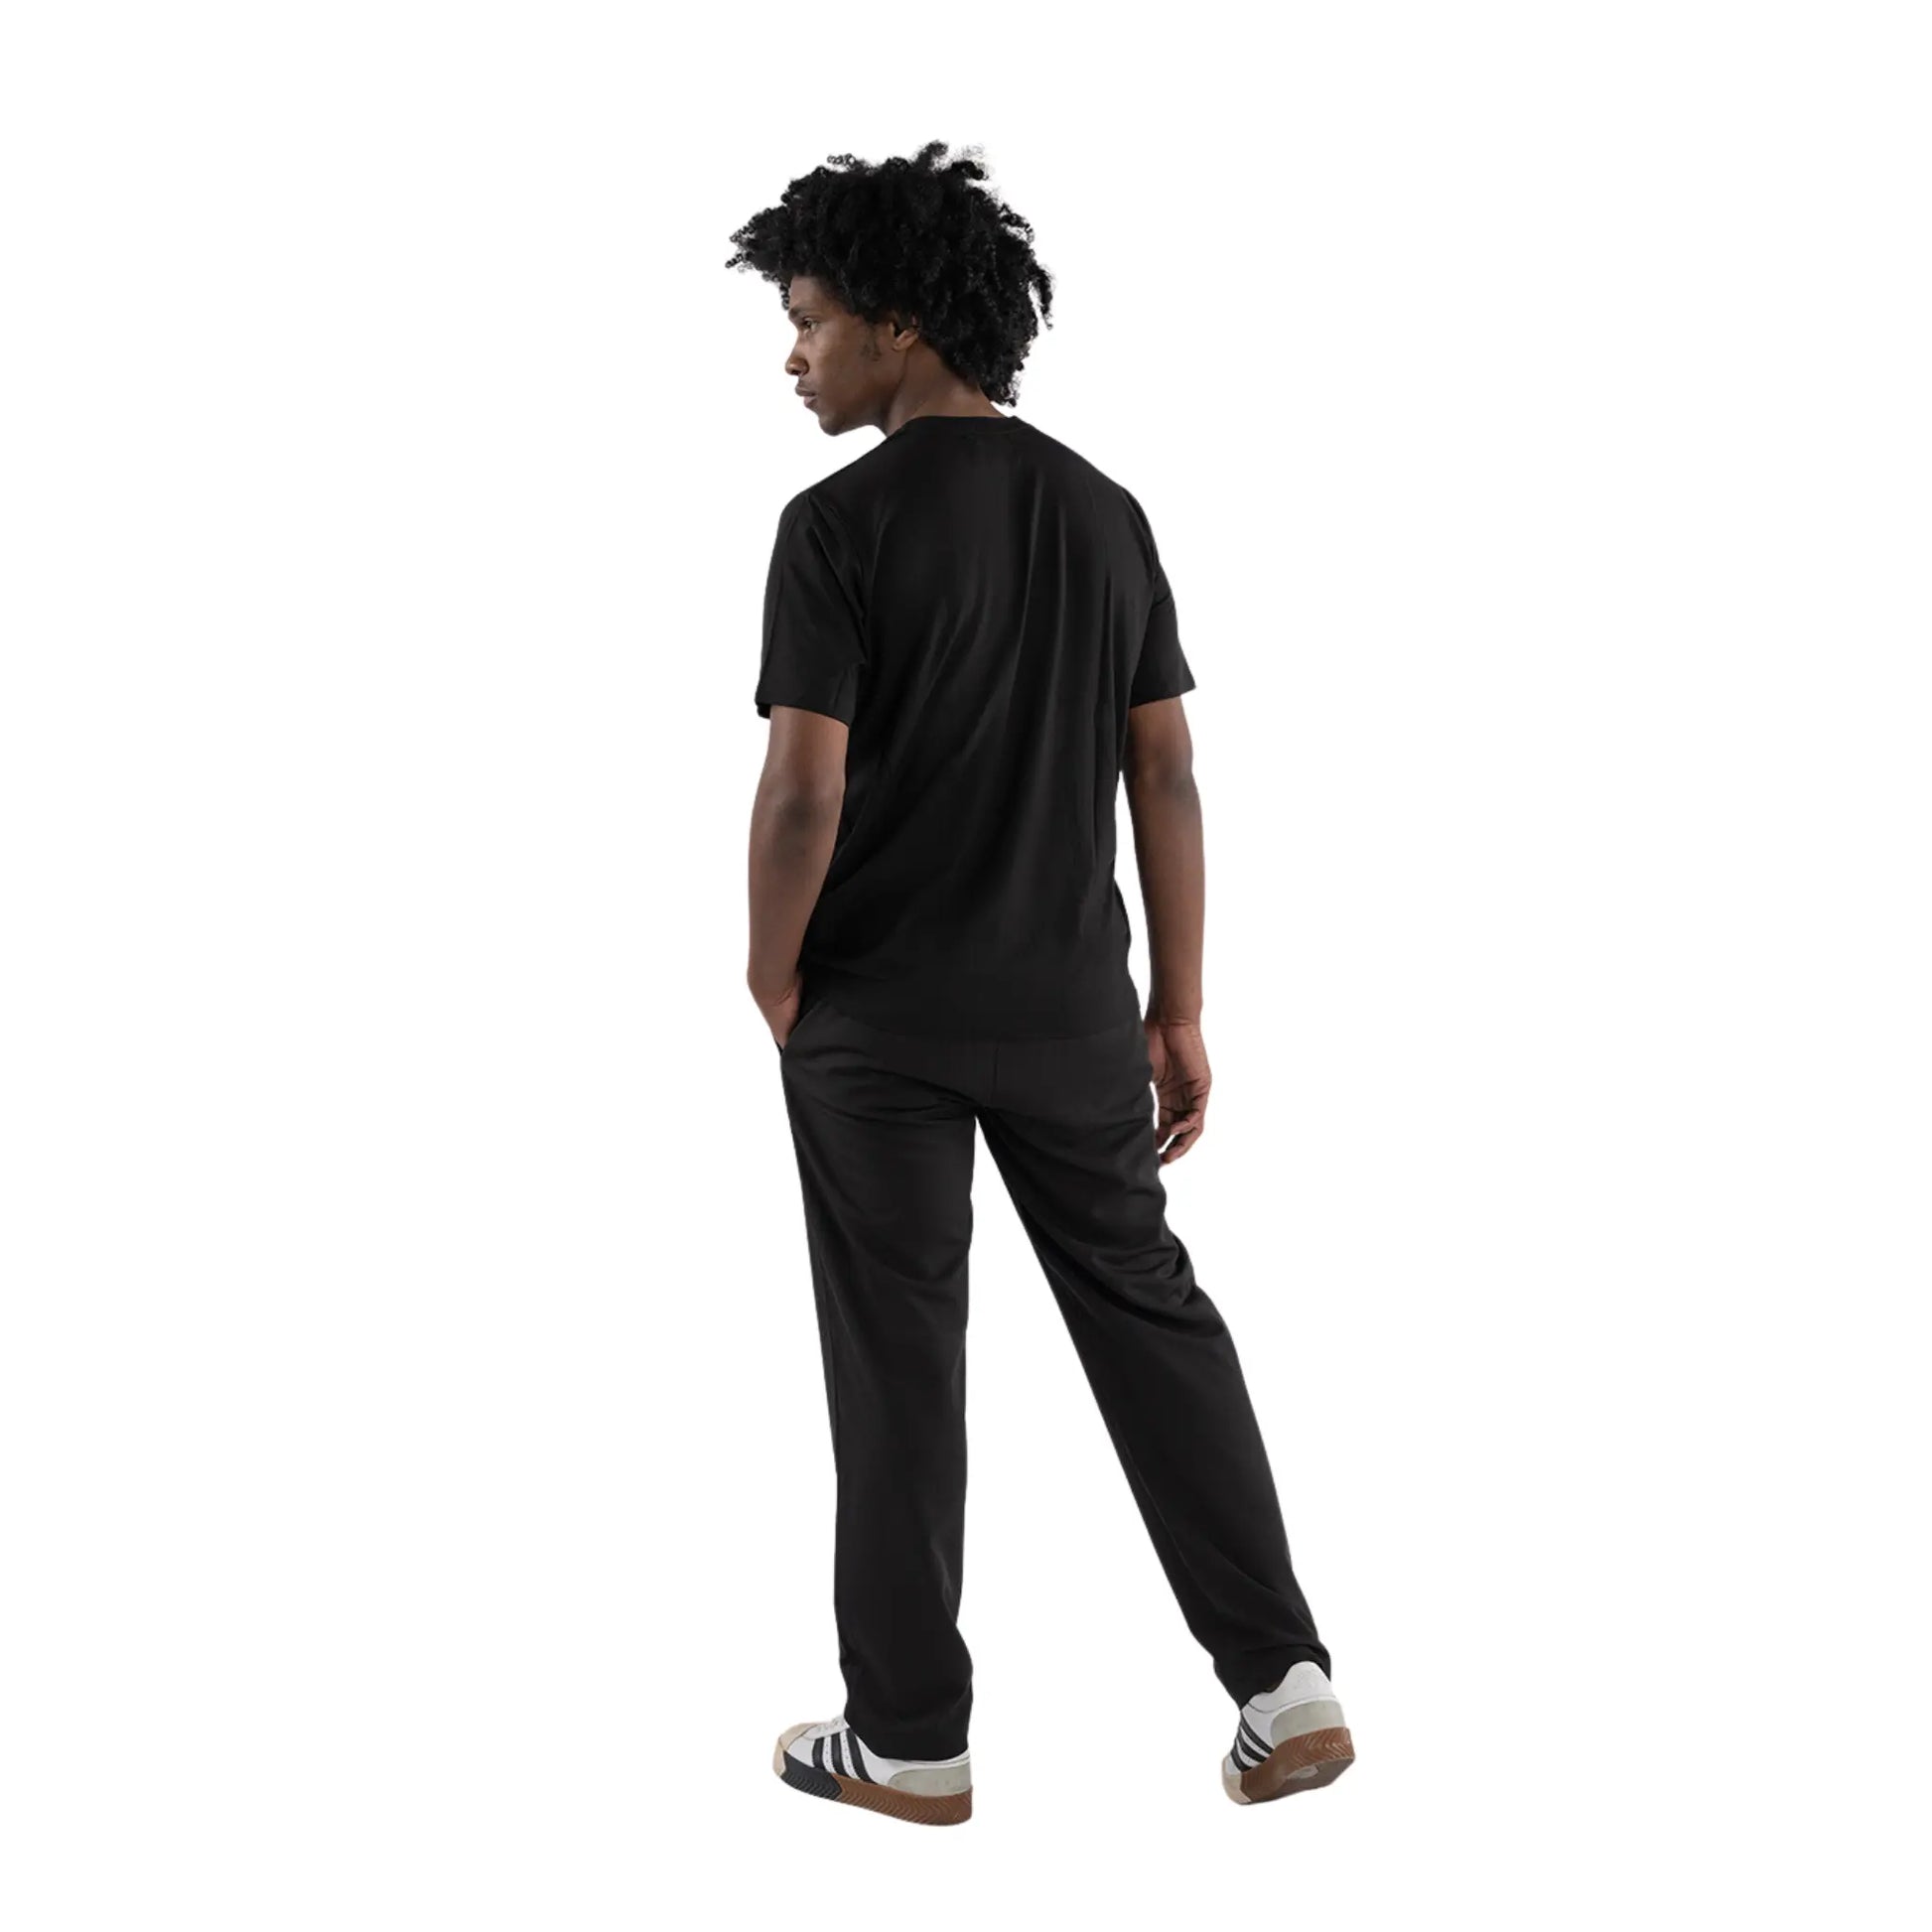 L’Homme Moderne Smiley Regular Fit T-shirt worn by black man back view